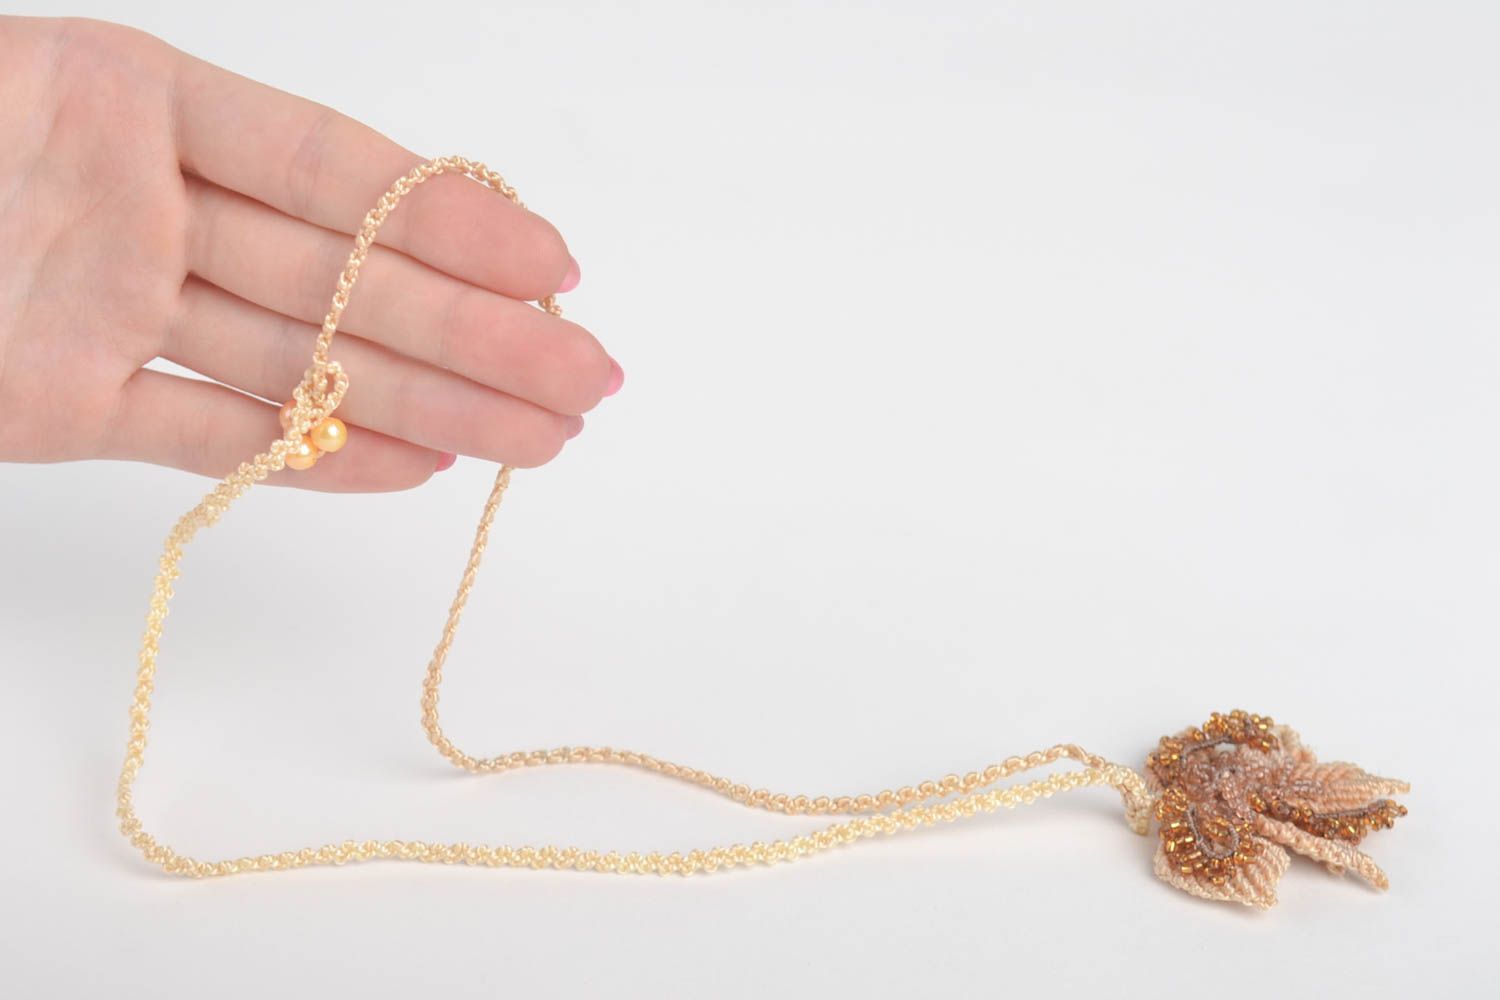 Handmade pendant designer pendant unusual accessory macrame jewelry gift ideas photo 5